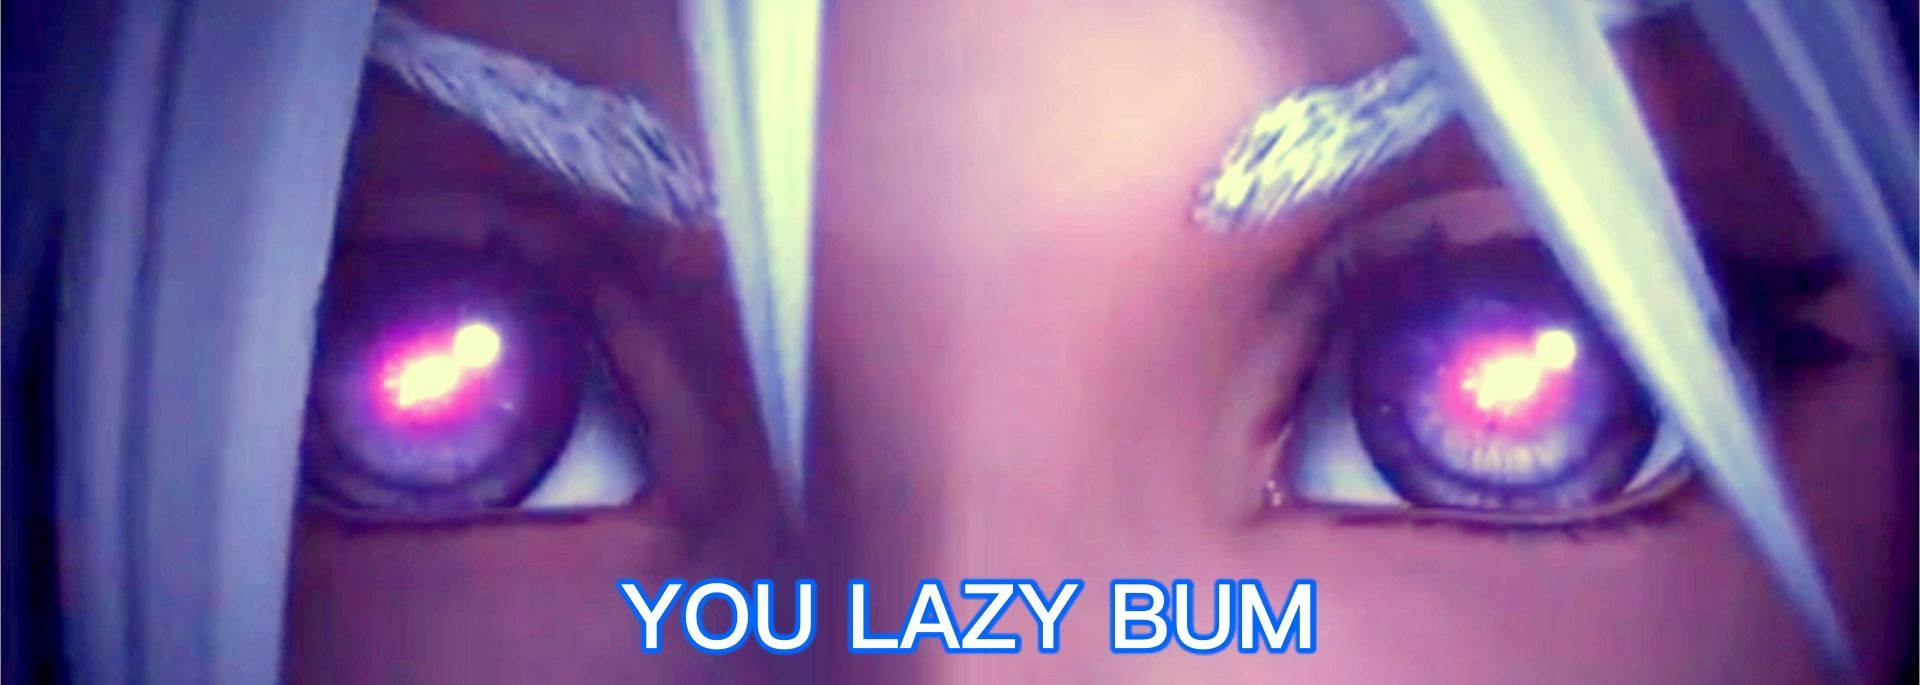 You Lazy Bum